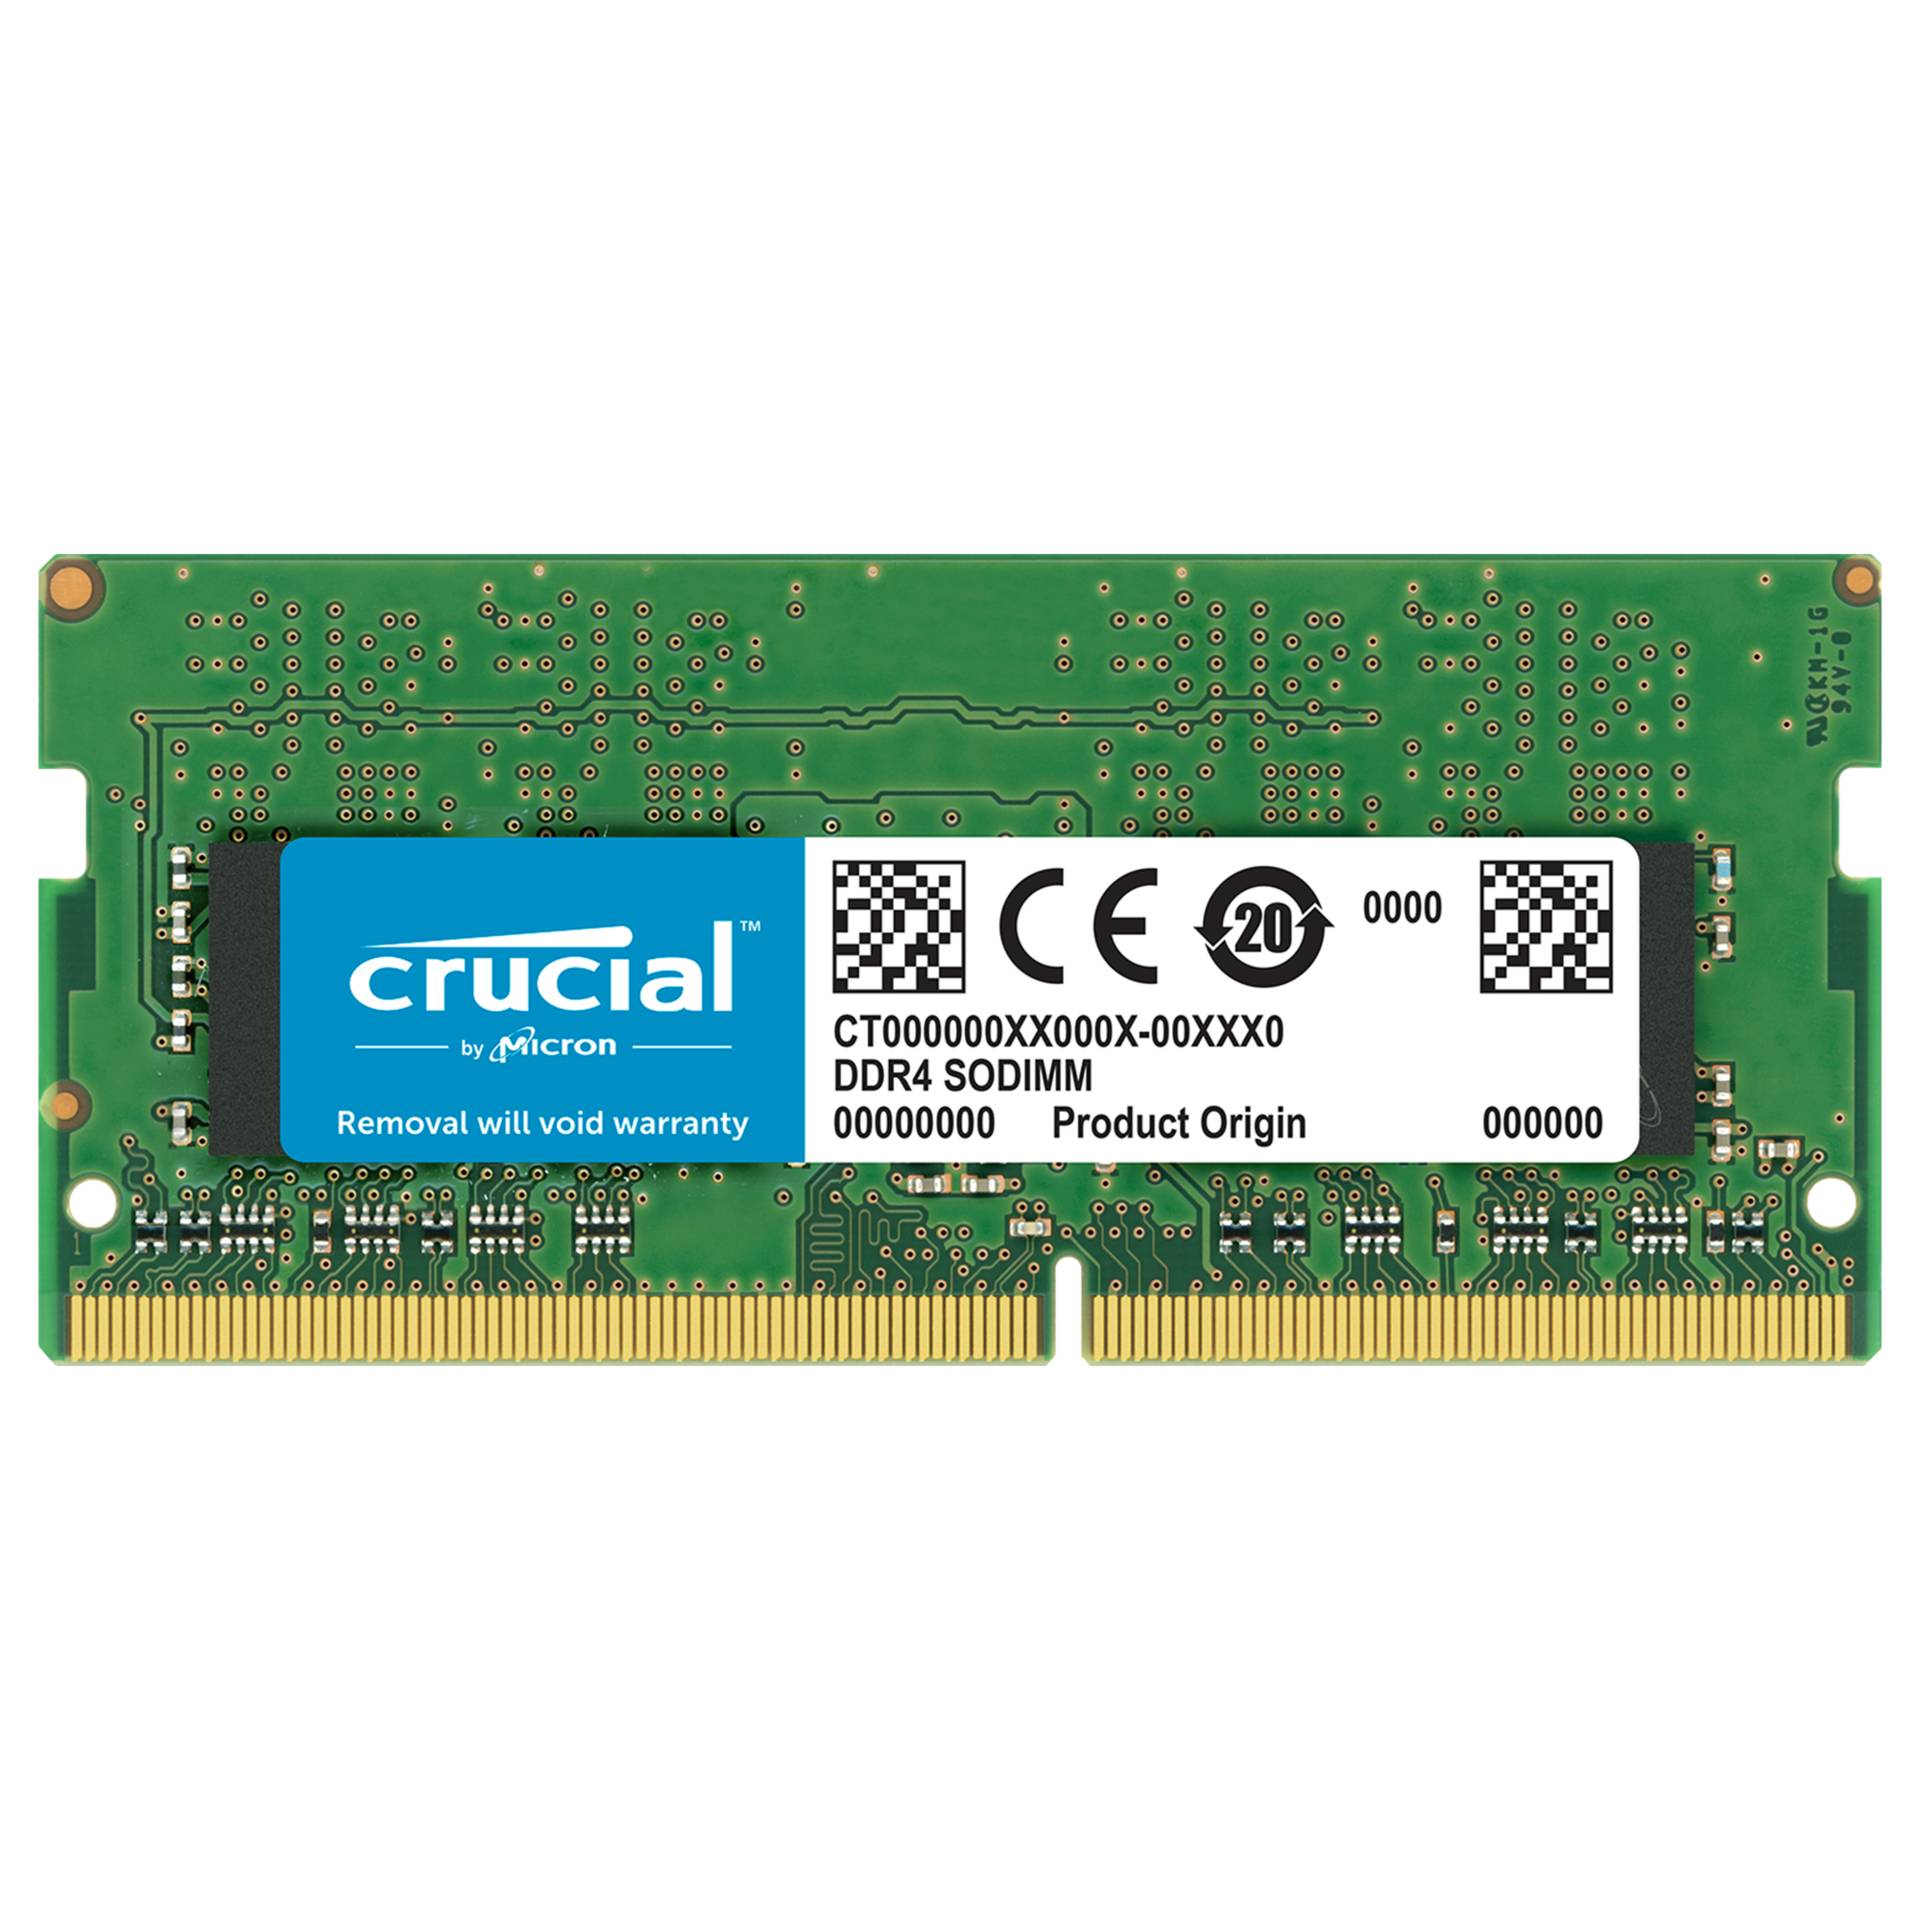 DDR4RAM 8GB DDR4-2666 Crucial Memory for Mac SO-DIMM, CL19